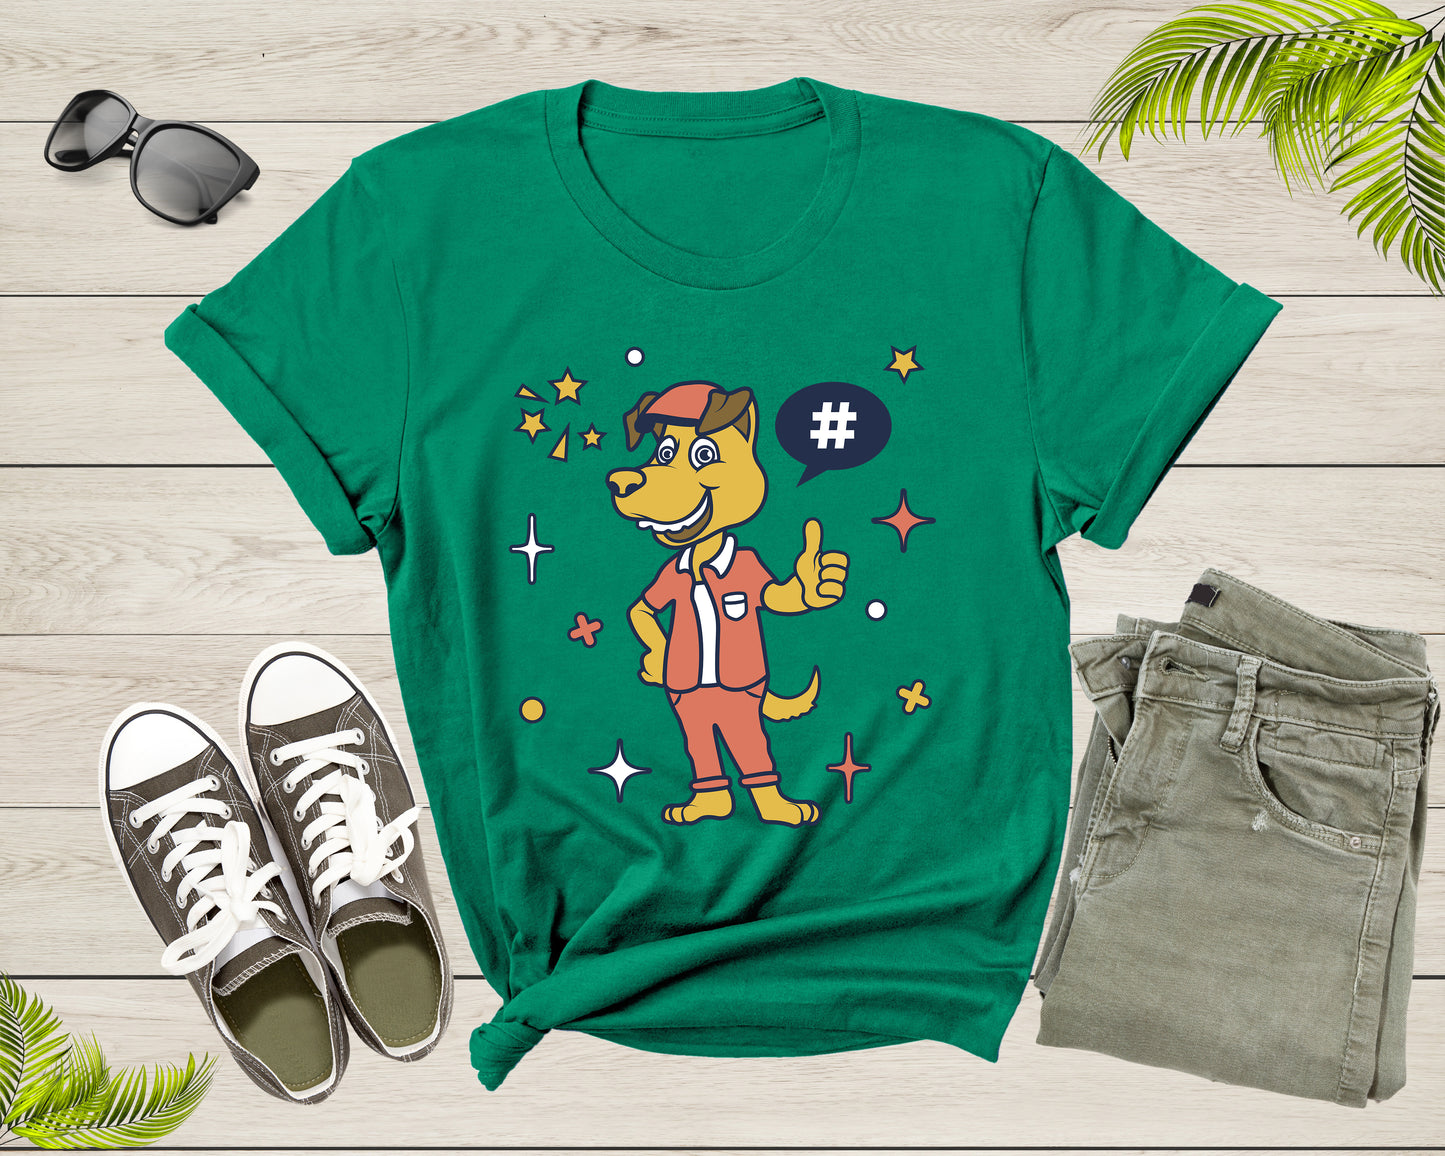 Cute Funky Hipster Goofy Dog Dressed in Cartoon Character T-Shirt Dog Lover Gift T Shirt for Men Women Kids Boys Girls Graphic Tshirt